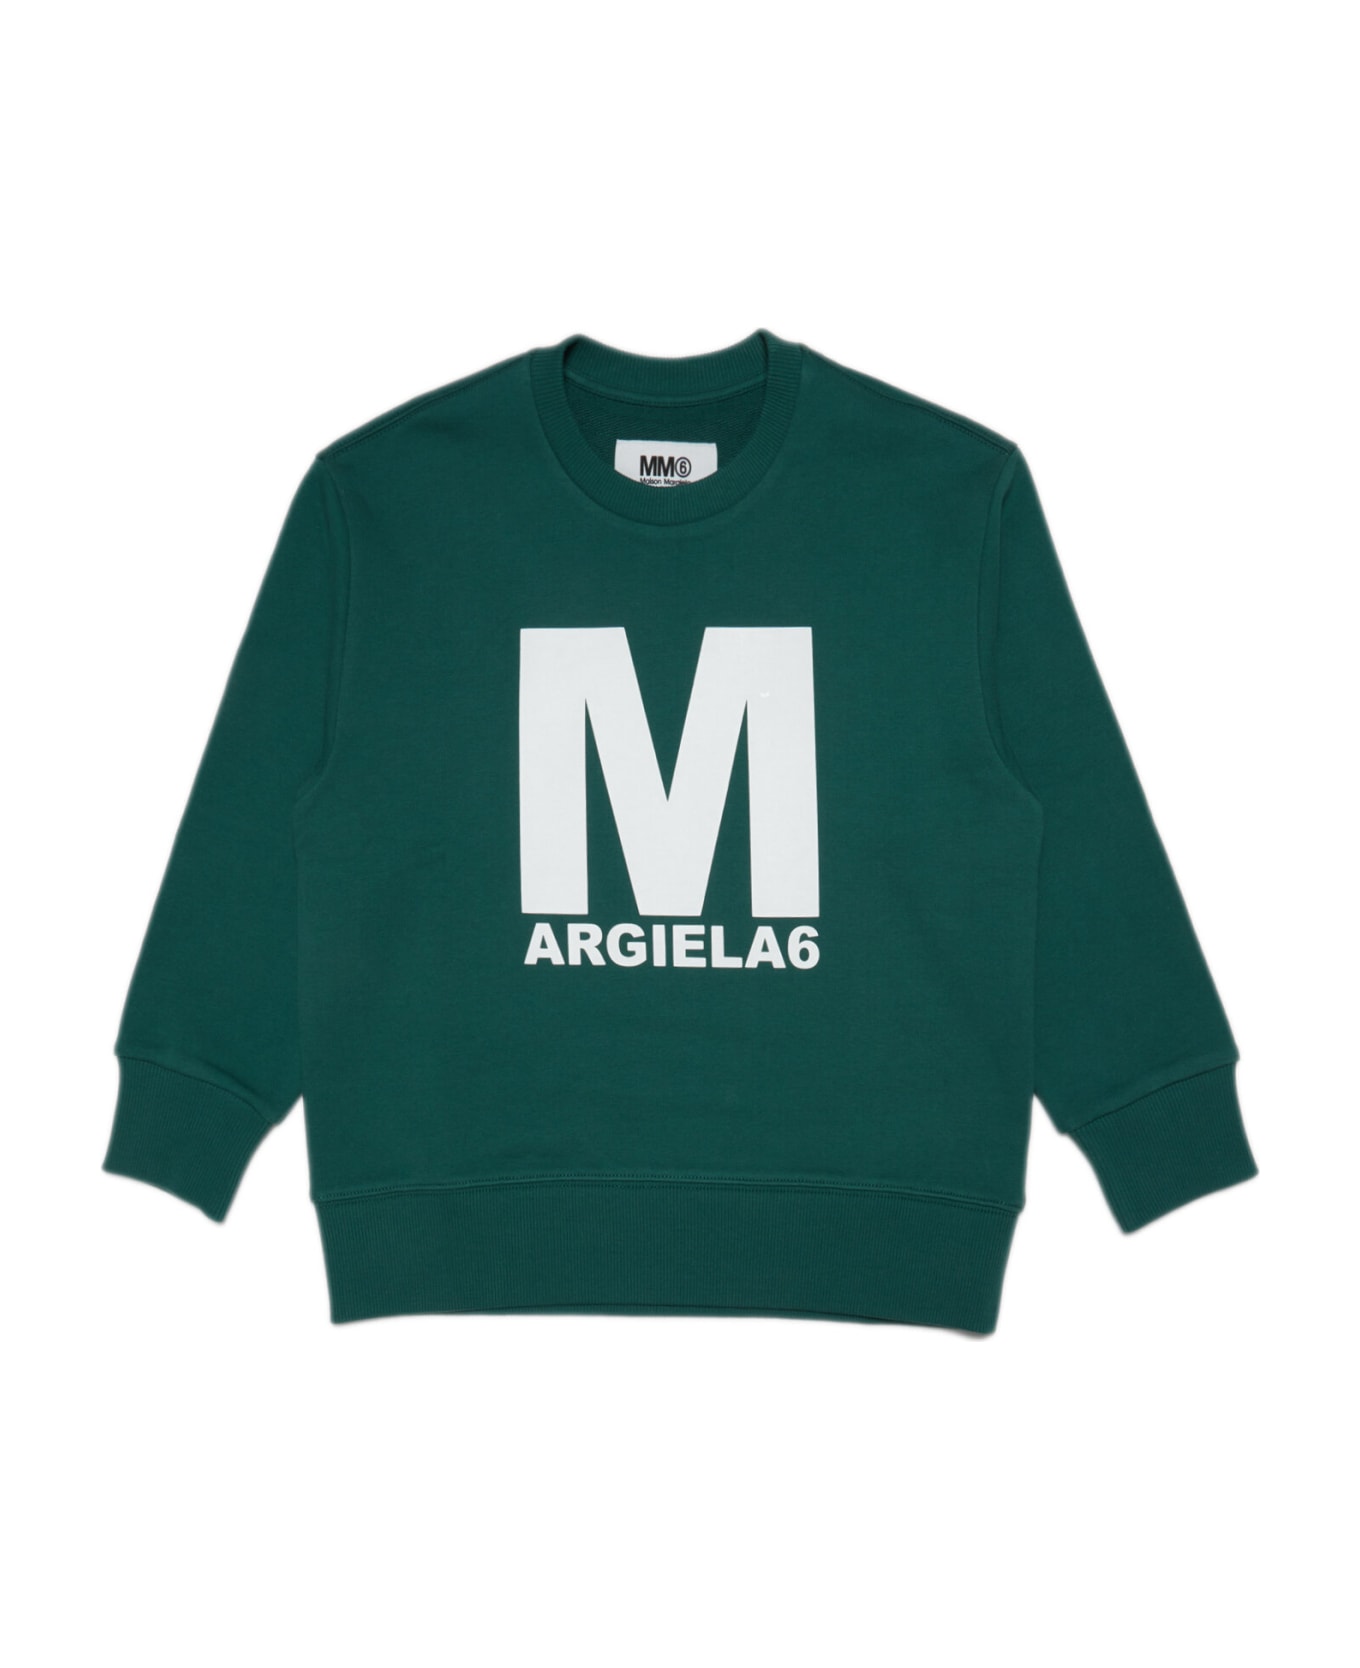 MM6 Maison Margiela Mm6s50u Sweat-shirt Maison Margiela Green Cotton Crewneck Sweatshirt With Thick Logo - Forest green